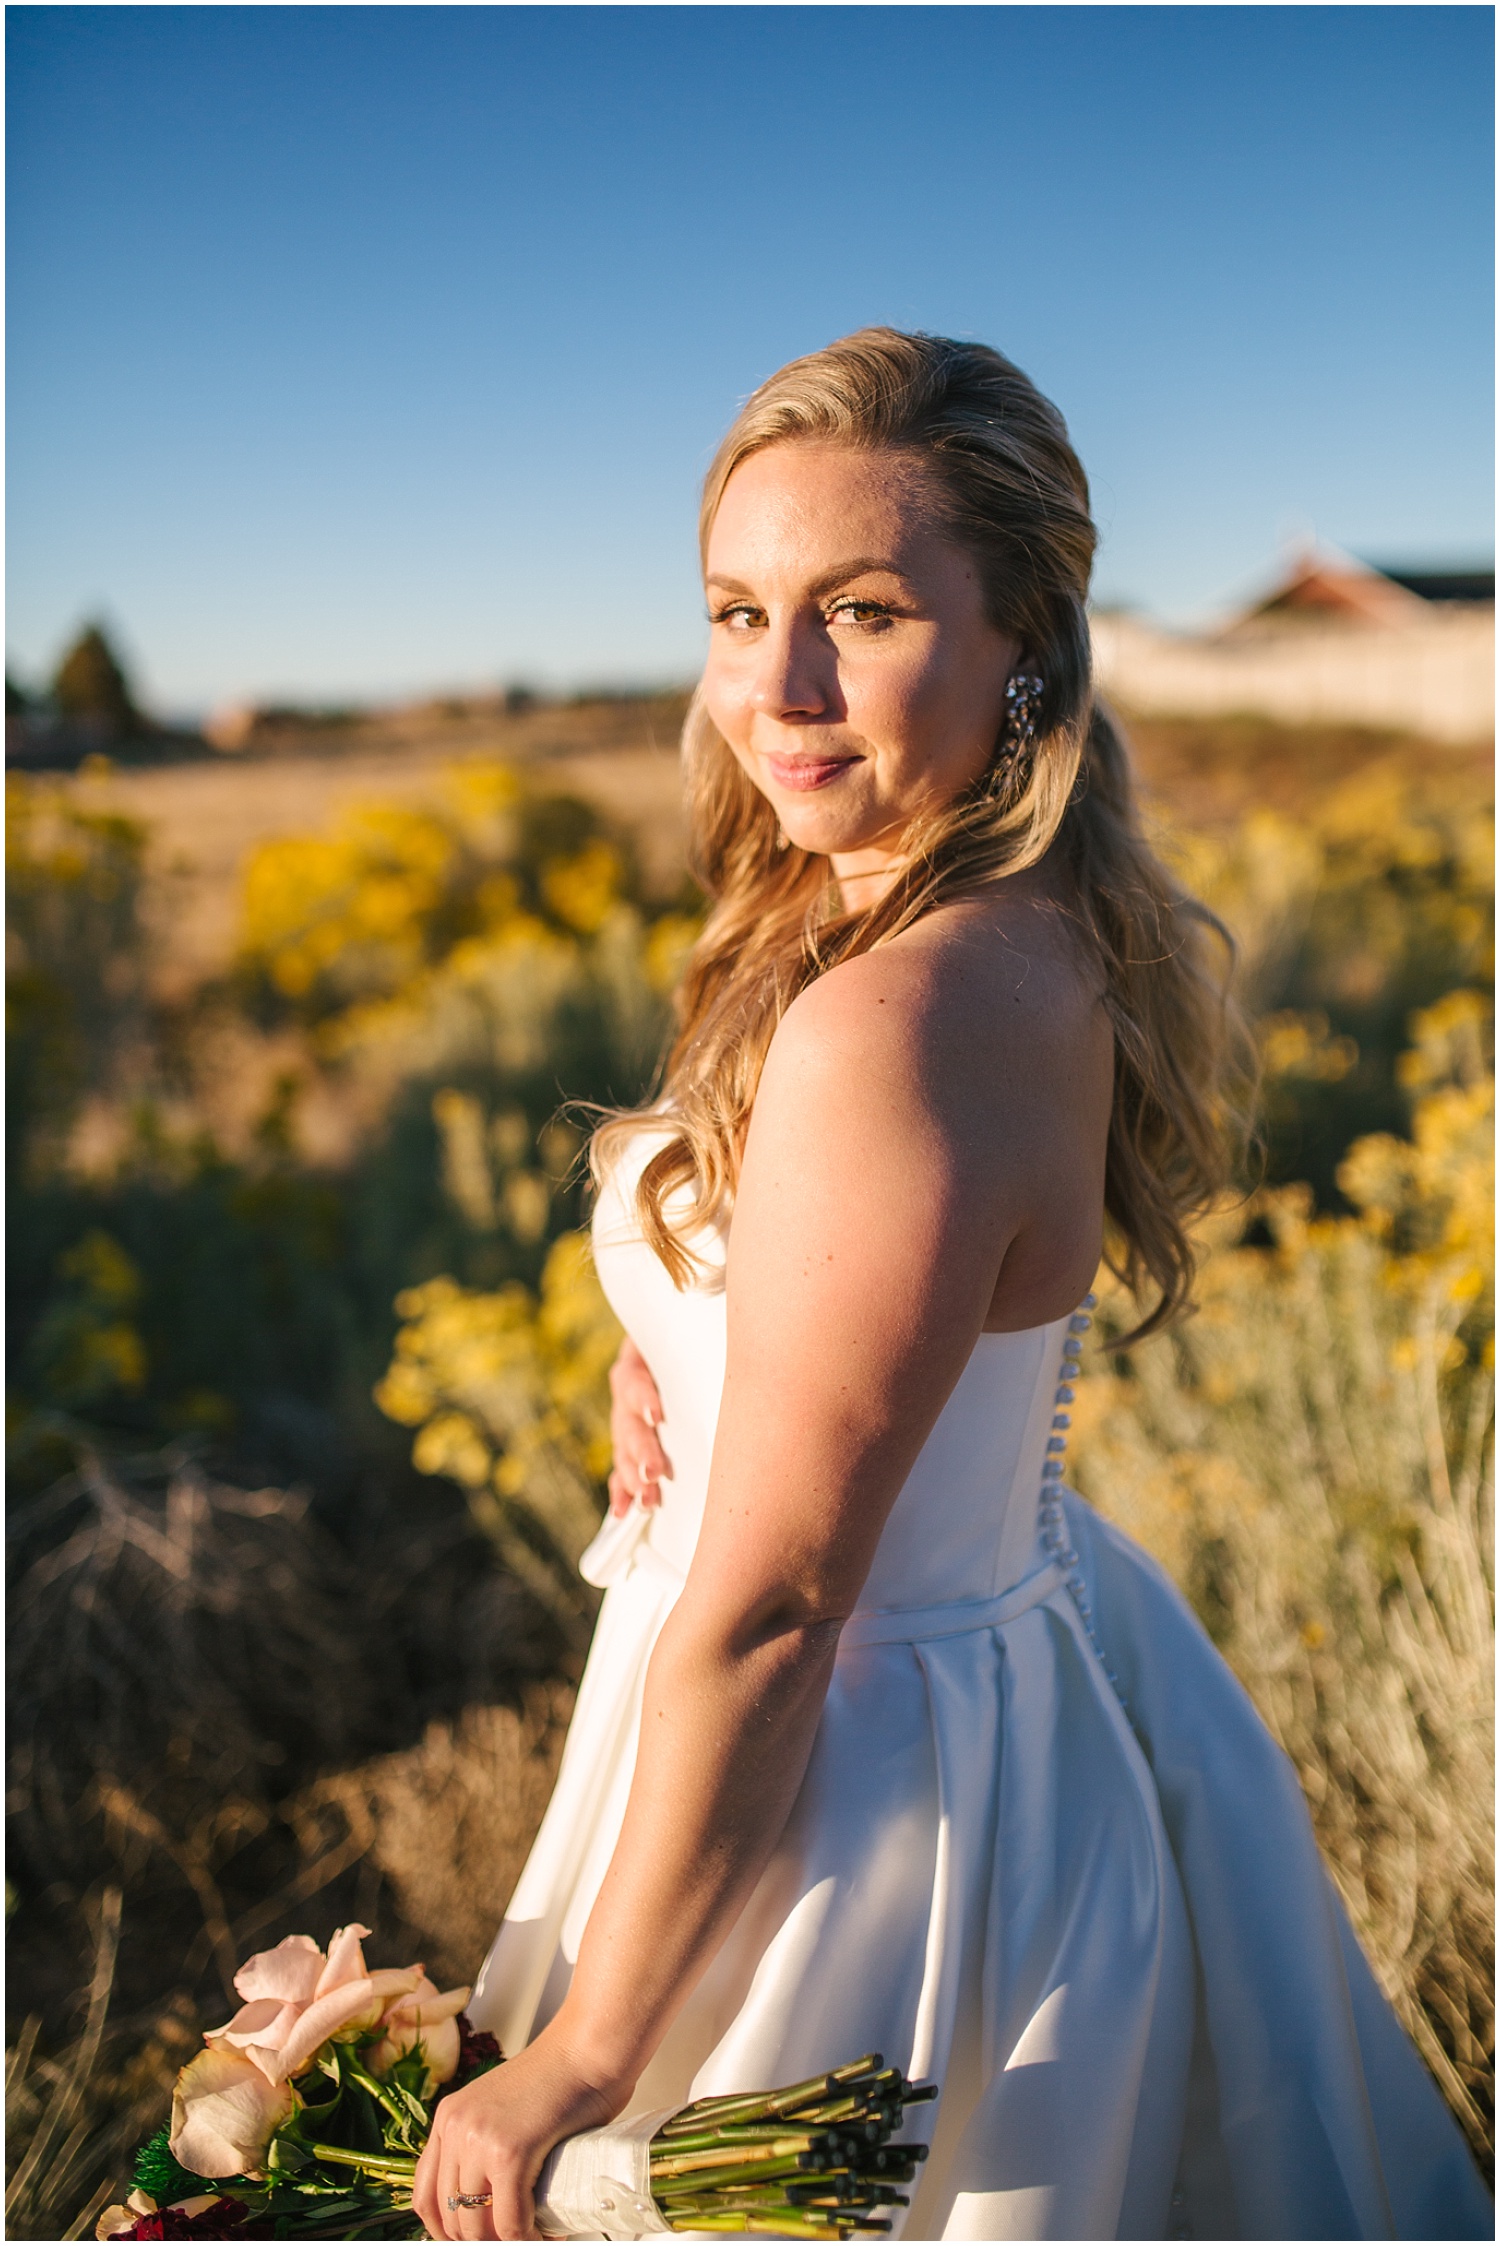 Bridal portrait at golden hour in Albuquerque New Mexico | Dress by Ann Matthews